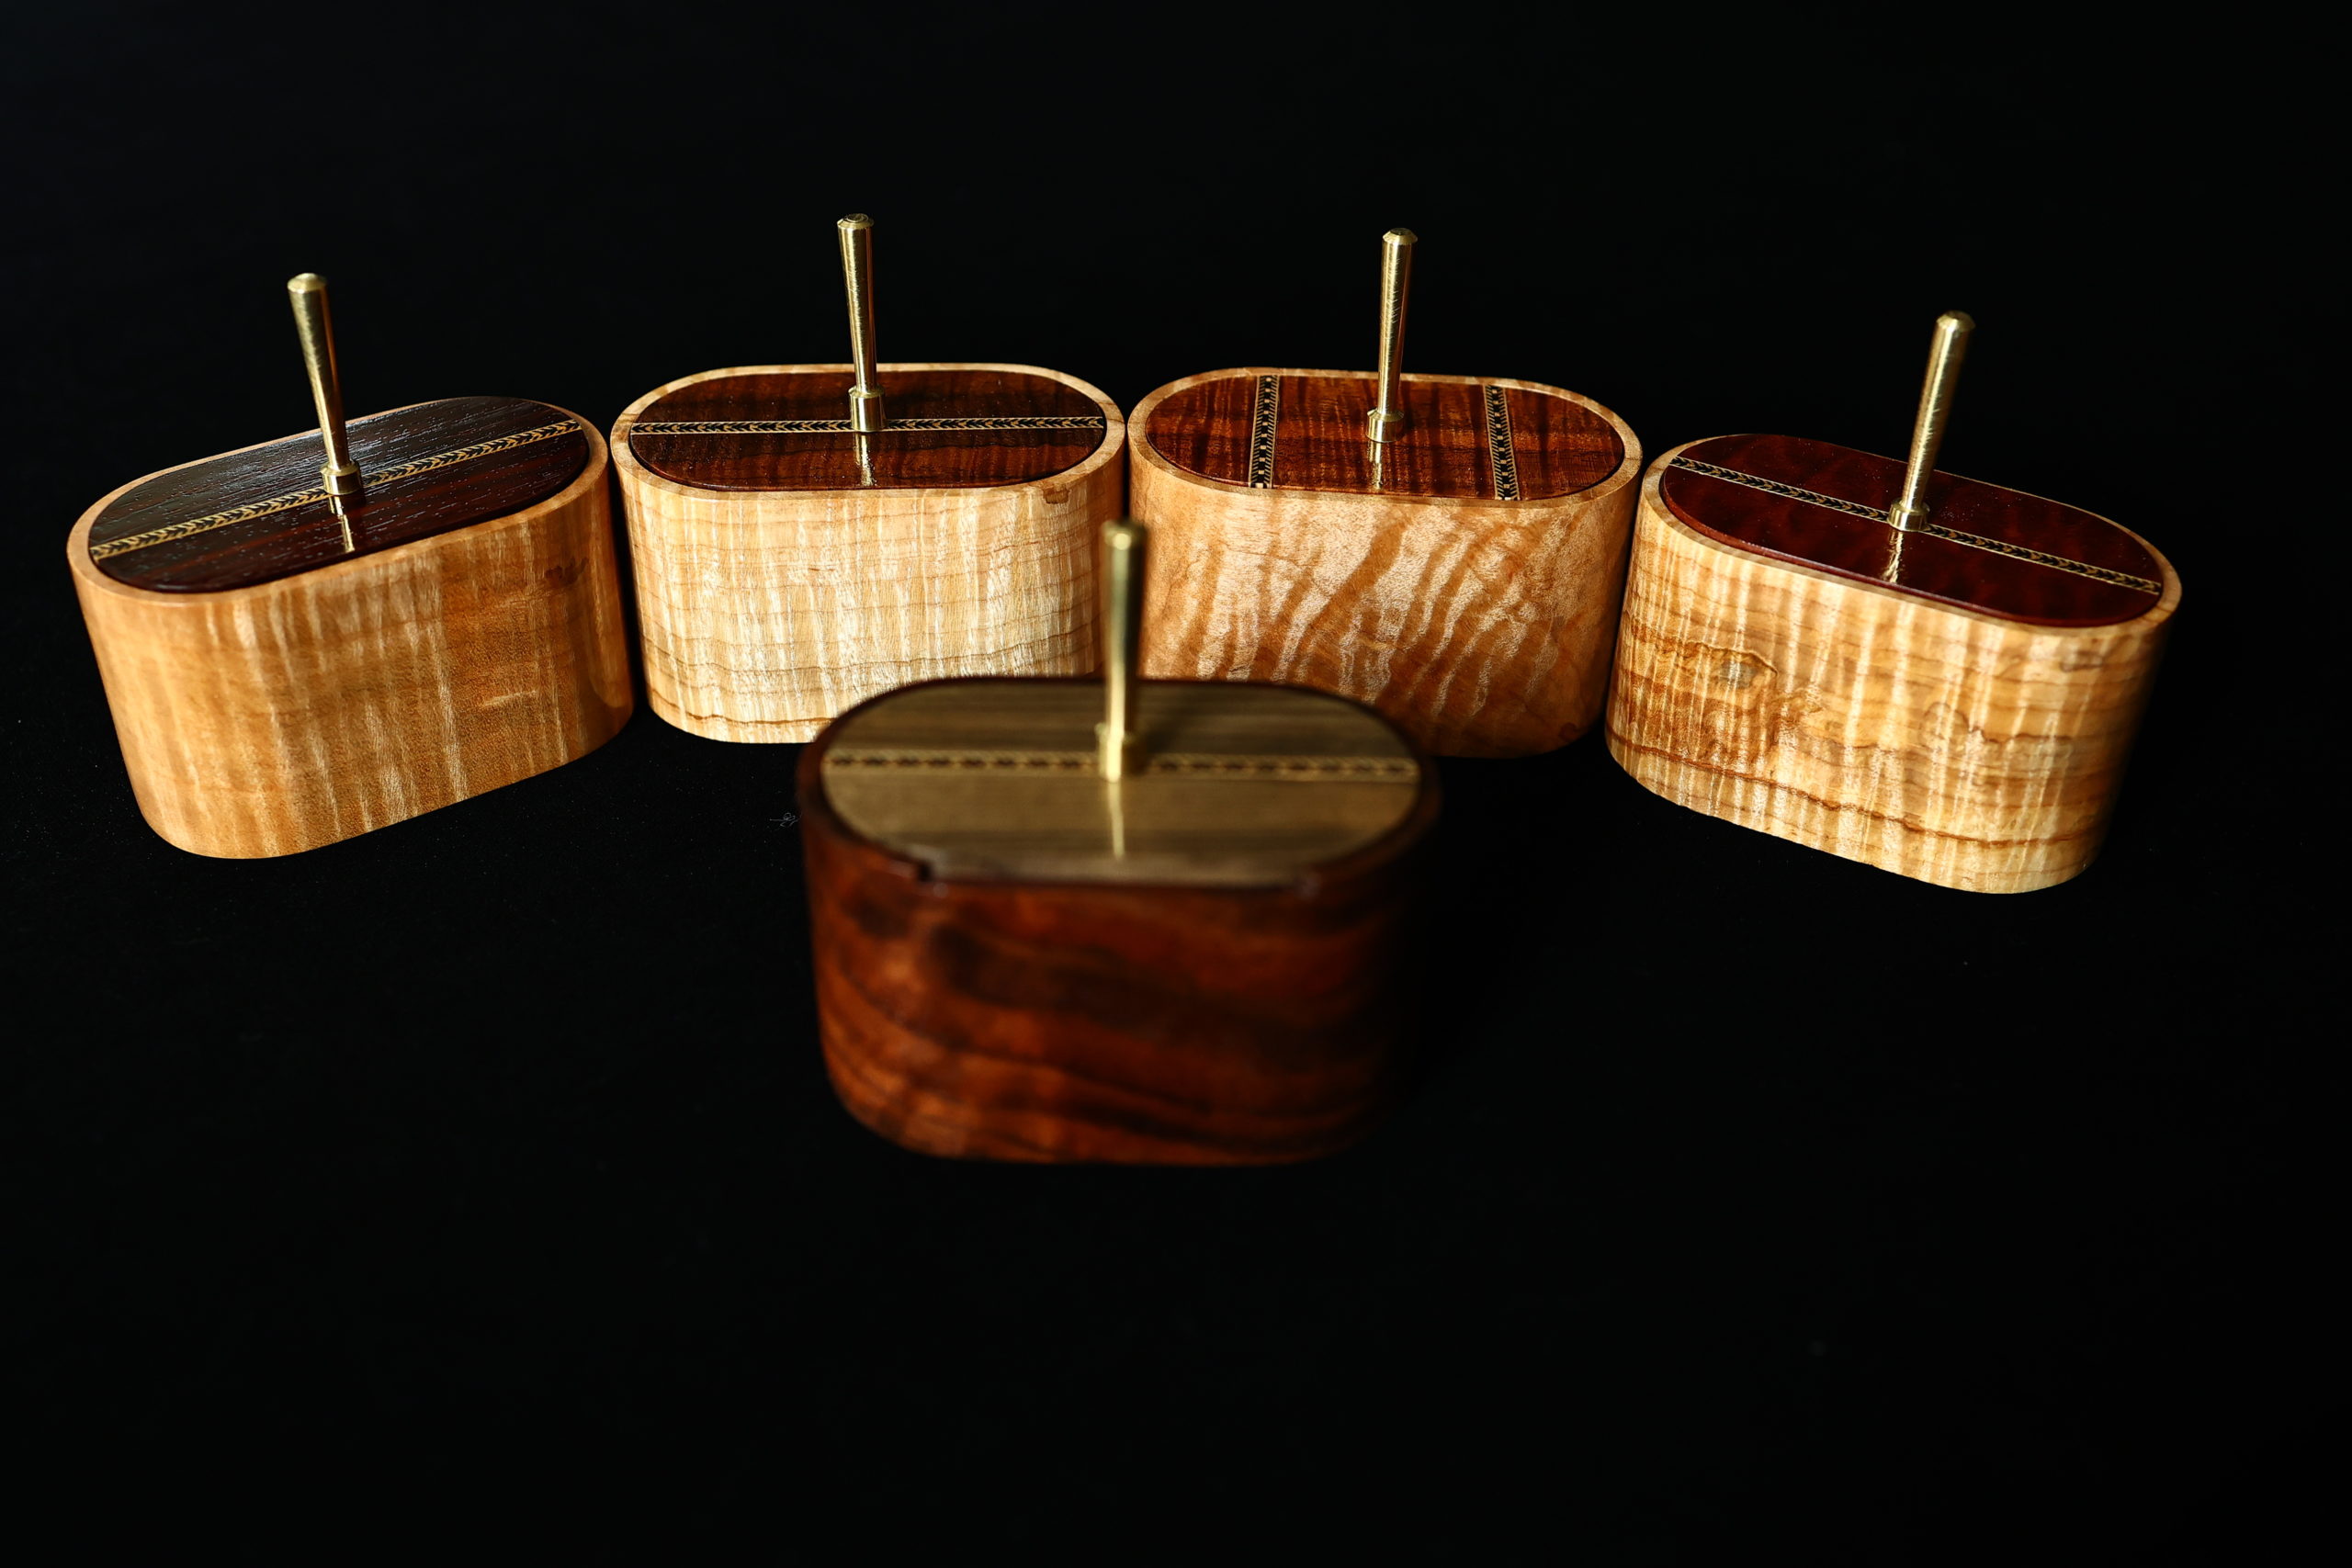 Handmade Keepsake Box by Copper Pig Woodworking Made from Santa Cruz Guitar Company Offcuts